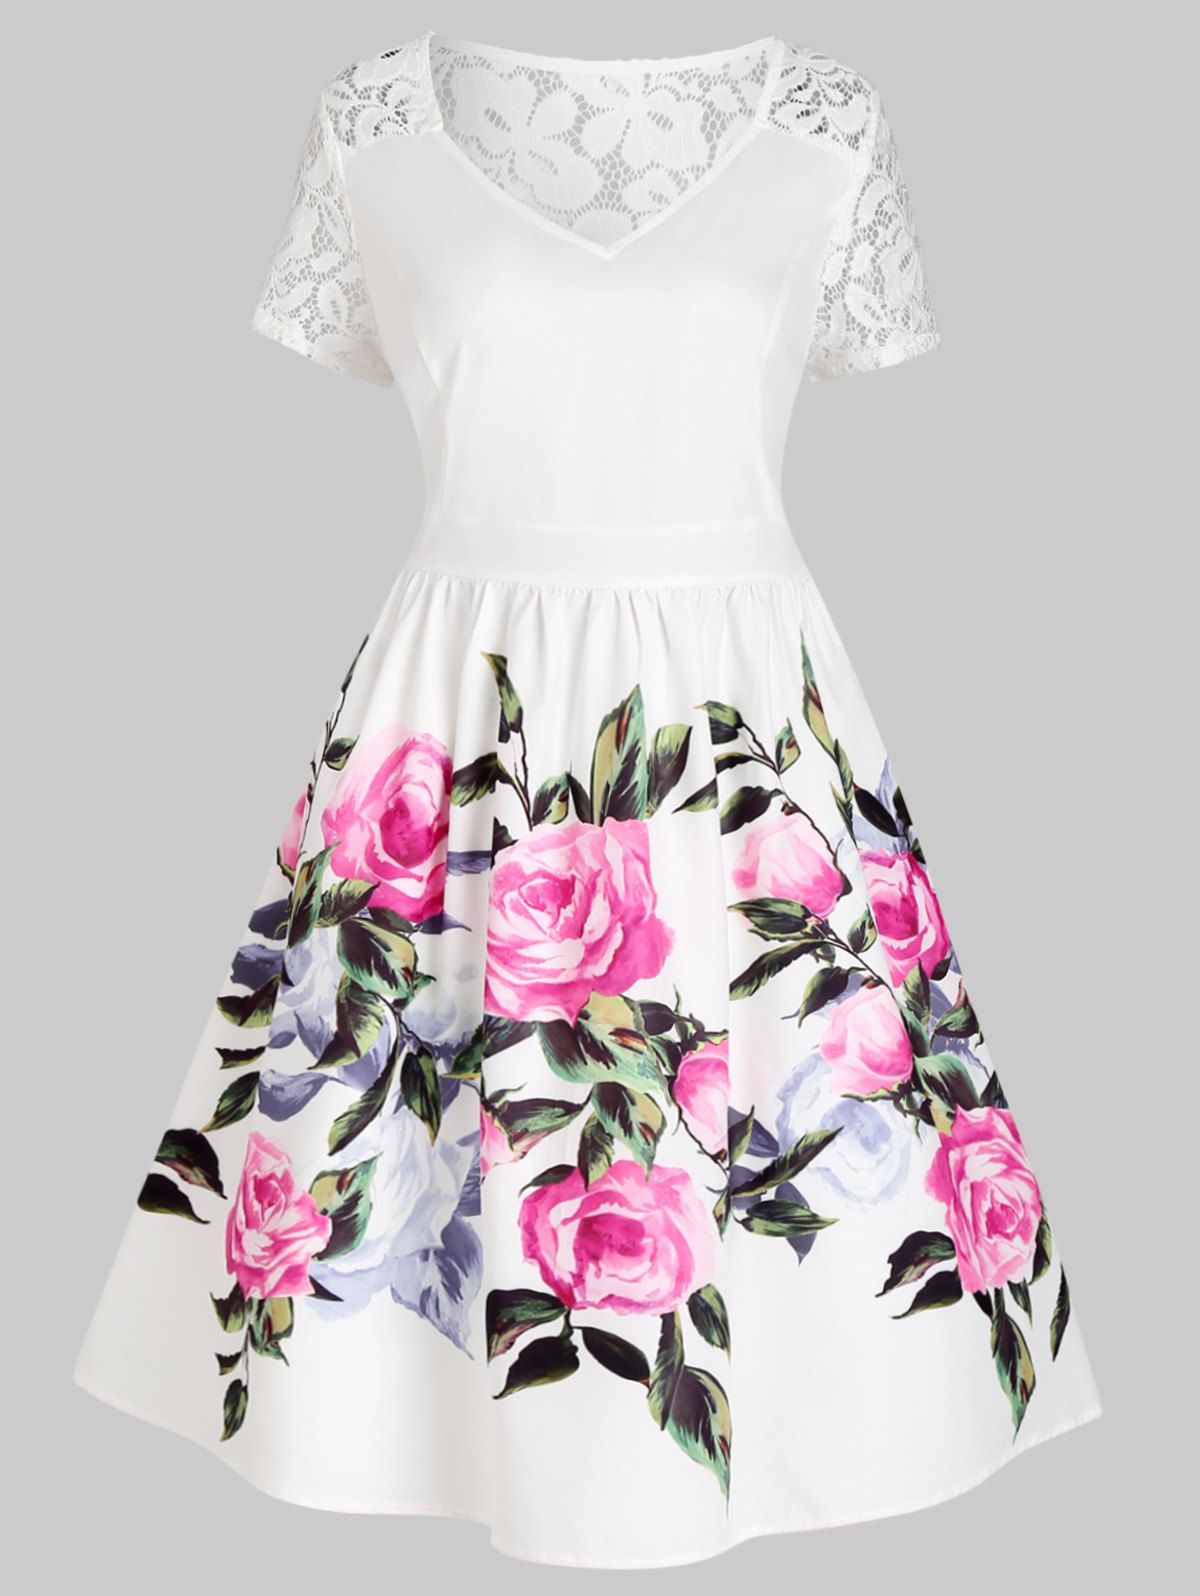 Plus Size Dress Knee Length High Waist Dress Rose Print Lace Panel A Line Dress - WHITE 4X